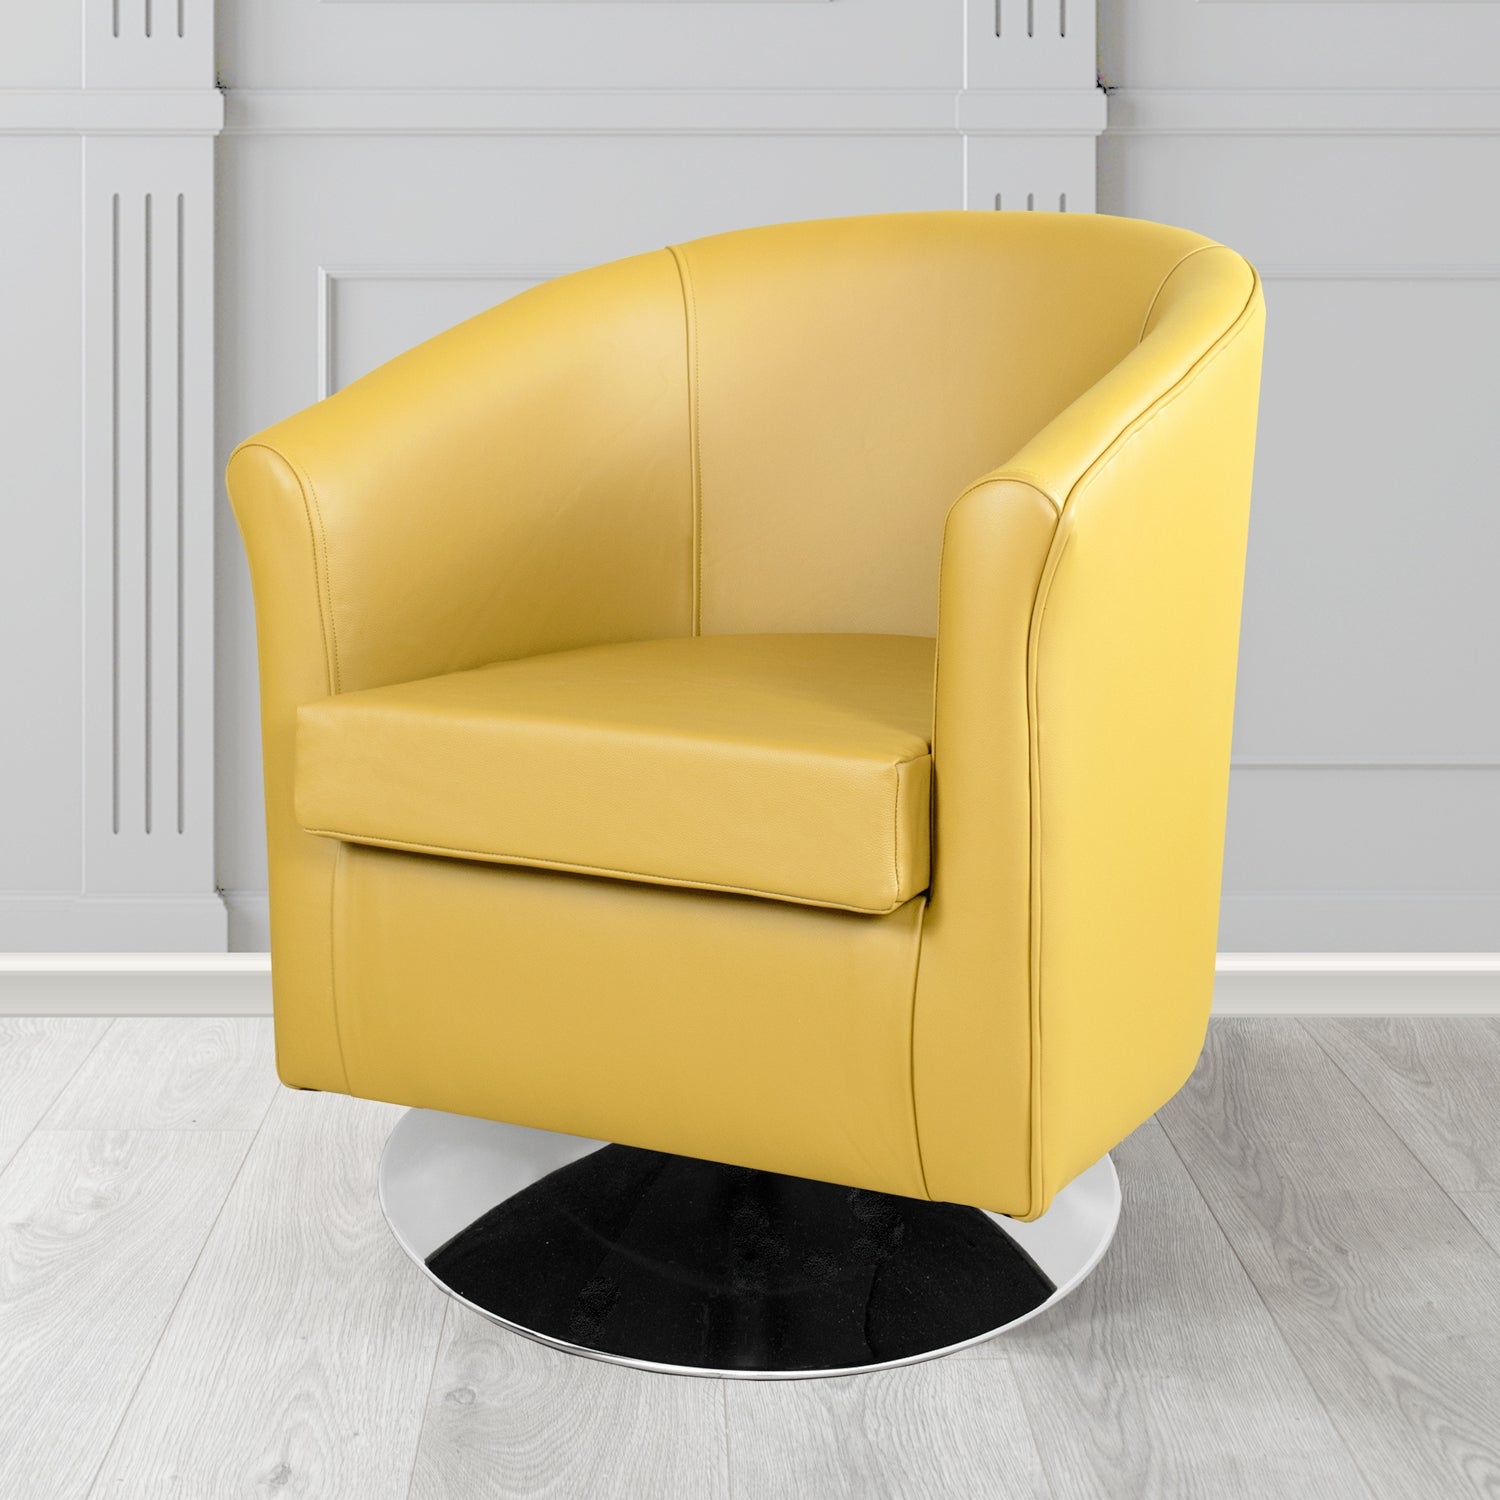 Tuscany Shelly Deluca Crib 5 Genuine Leather Swivel Tub Chair - The Tub Chair Shop